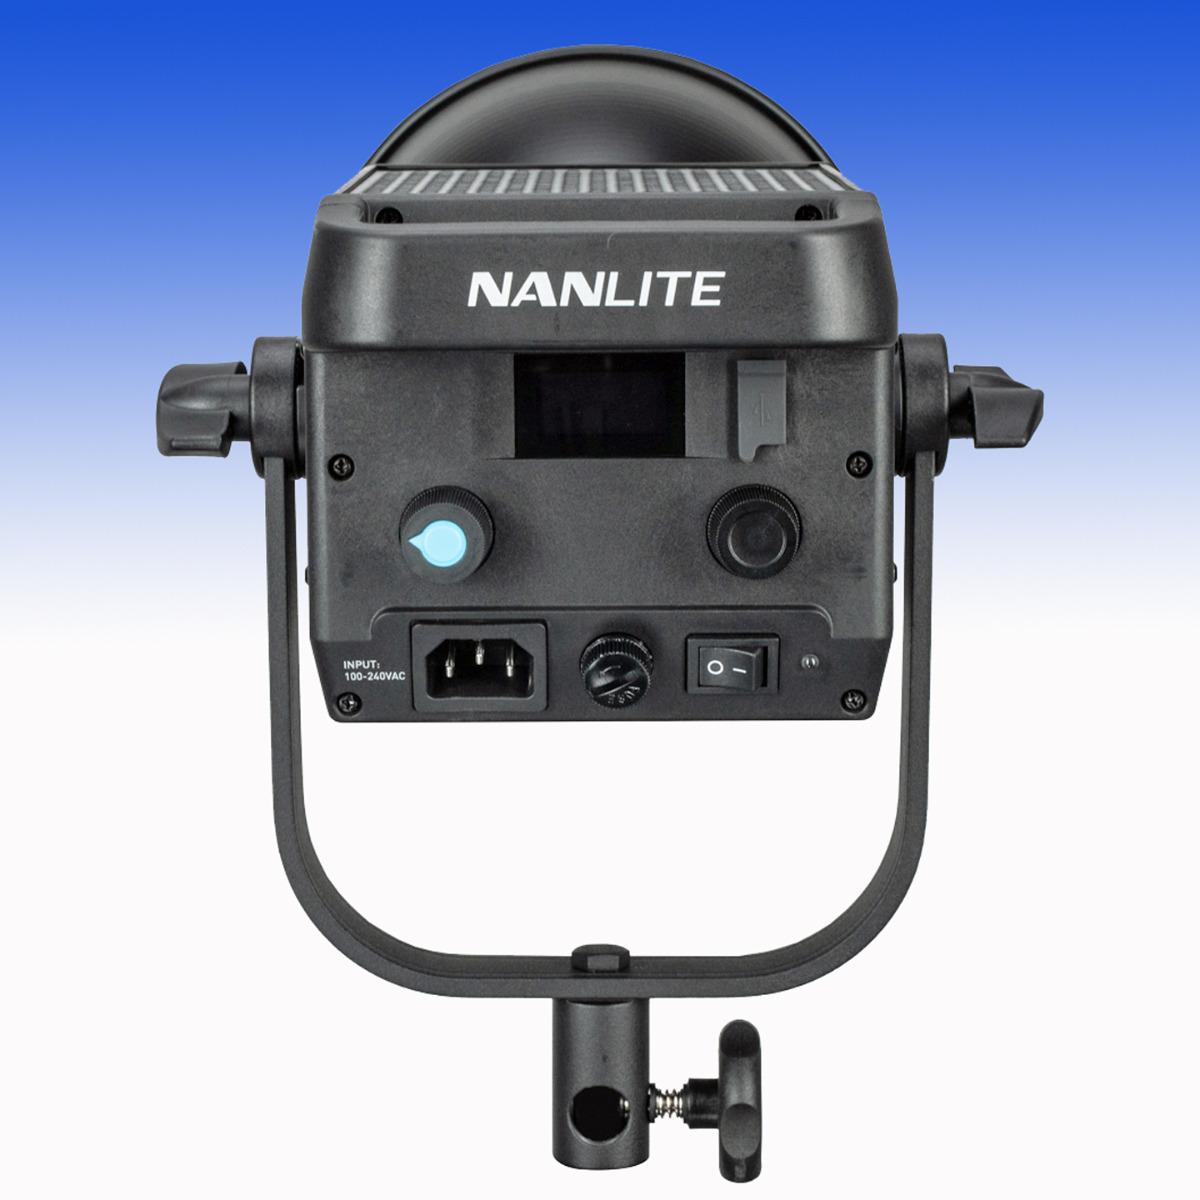 NANLITE FS-200 Tageslicht LED Leuchte - 29.380 Lux